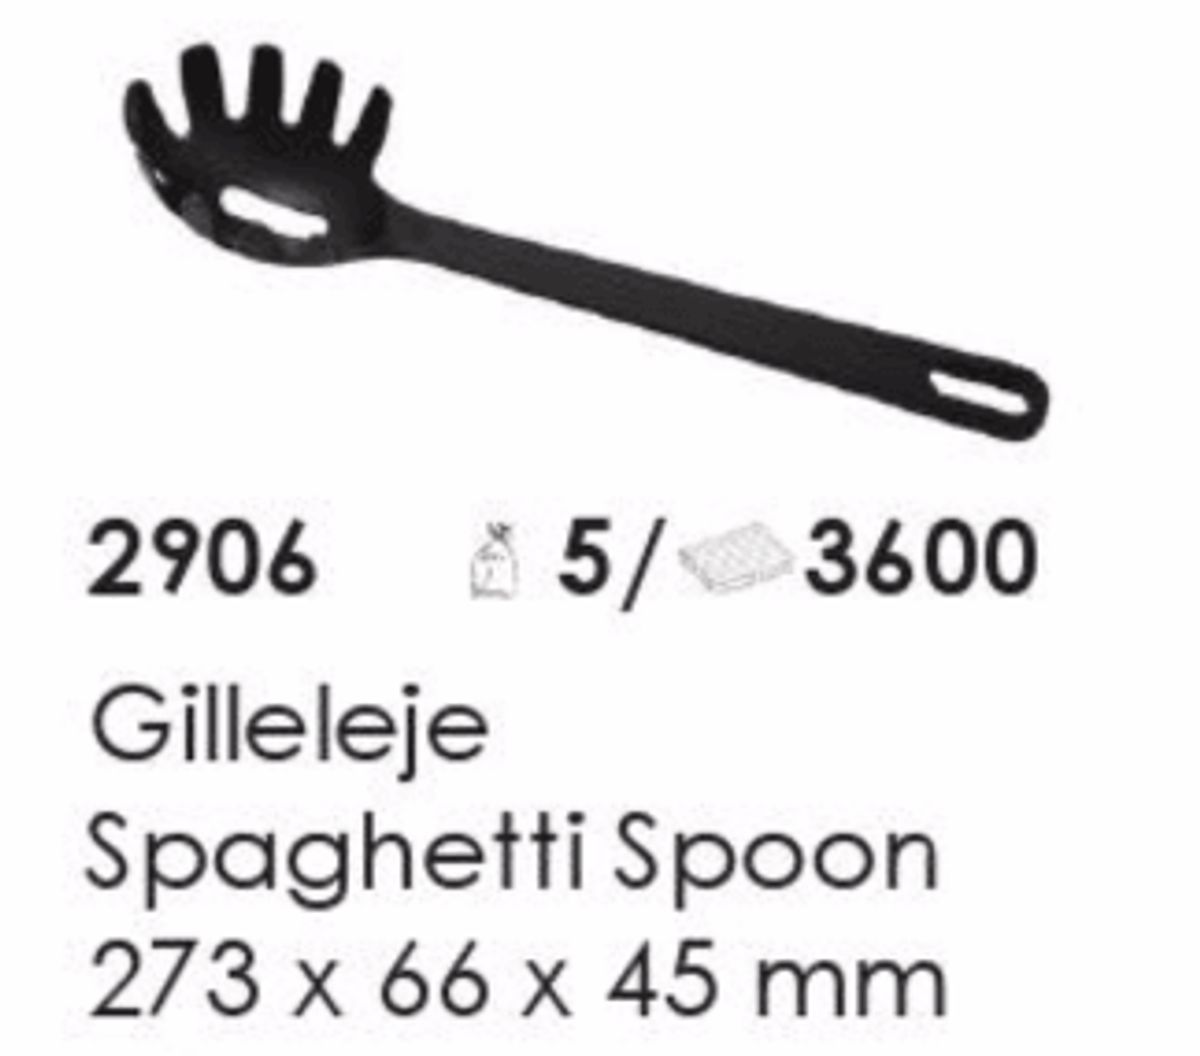 Gilleleje Spaghetti Spoon, artikel nr. 2906 (spaghetti ske) Foto: Screenshot fra katalog fra Plast Team A/S.